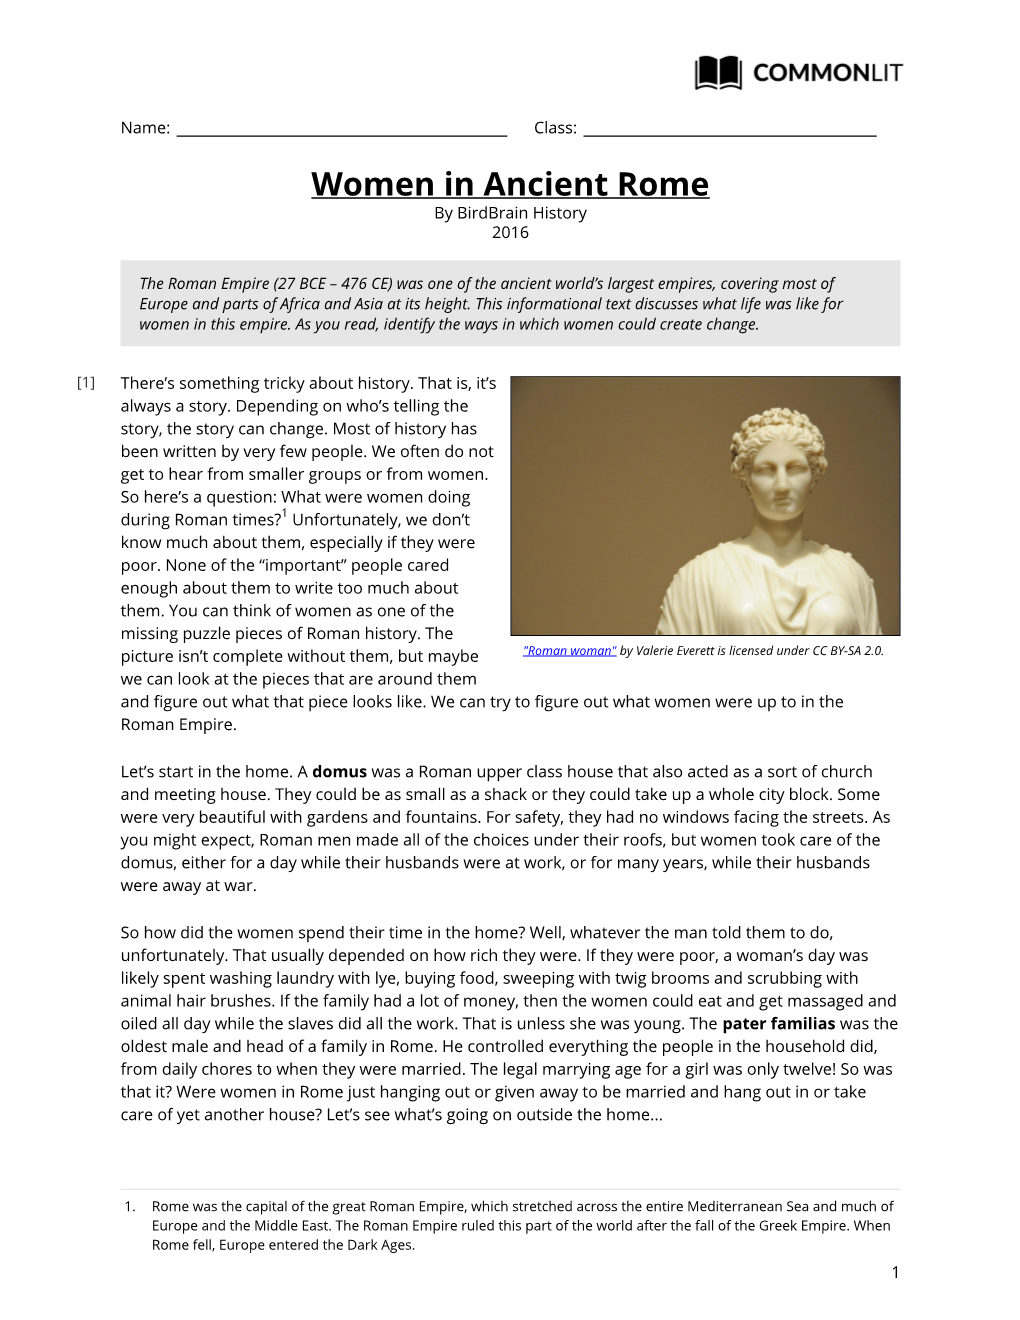 Commonlit | Women in Ancient Rome